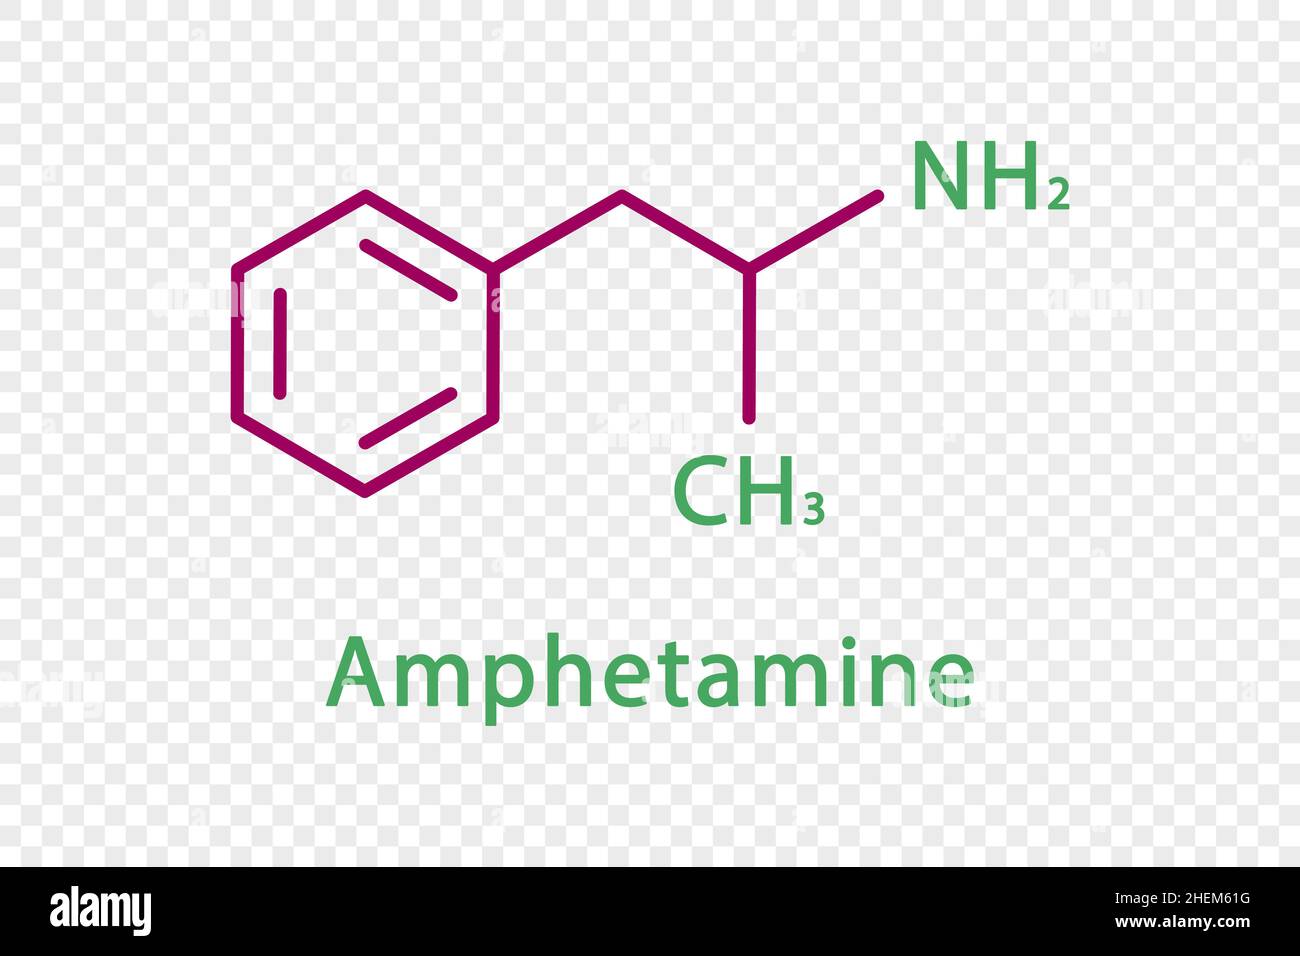 Amphetamine chemical formula. Amphetamine structural chemical formula isolated on transparent background. Stock Vector